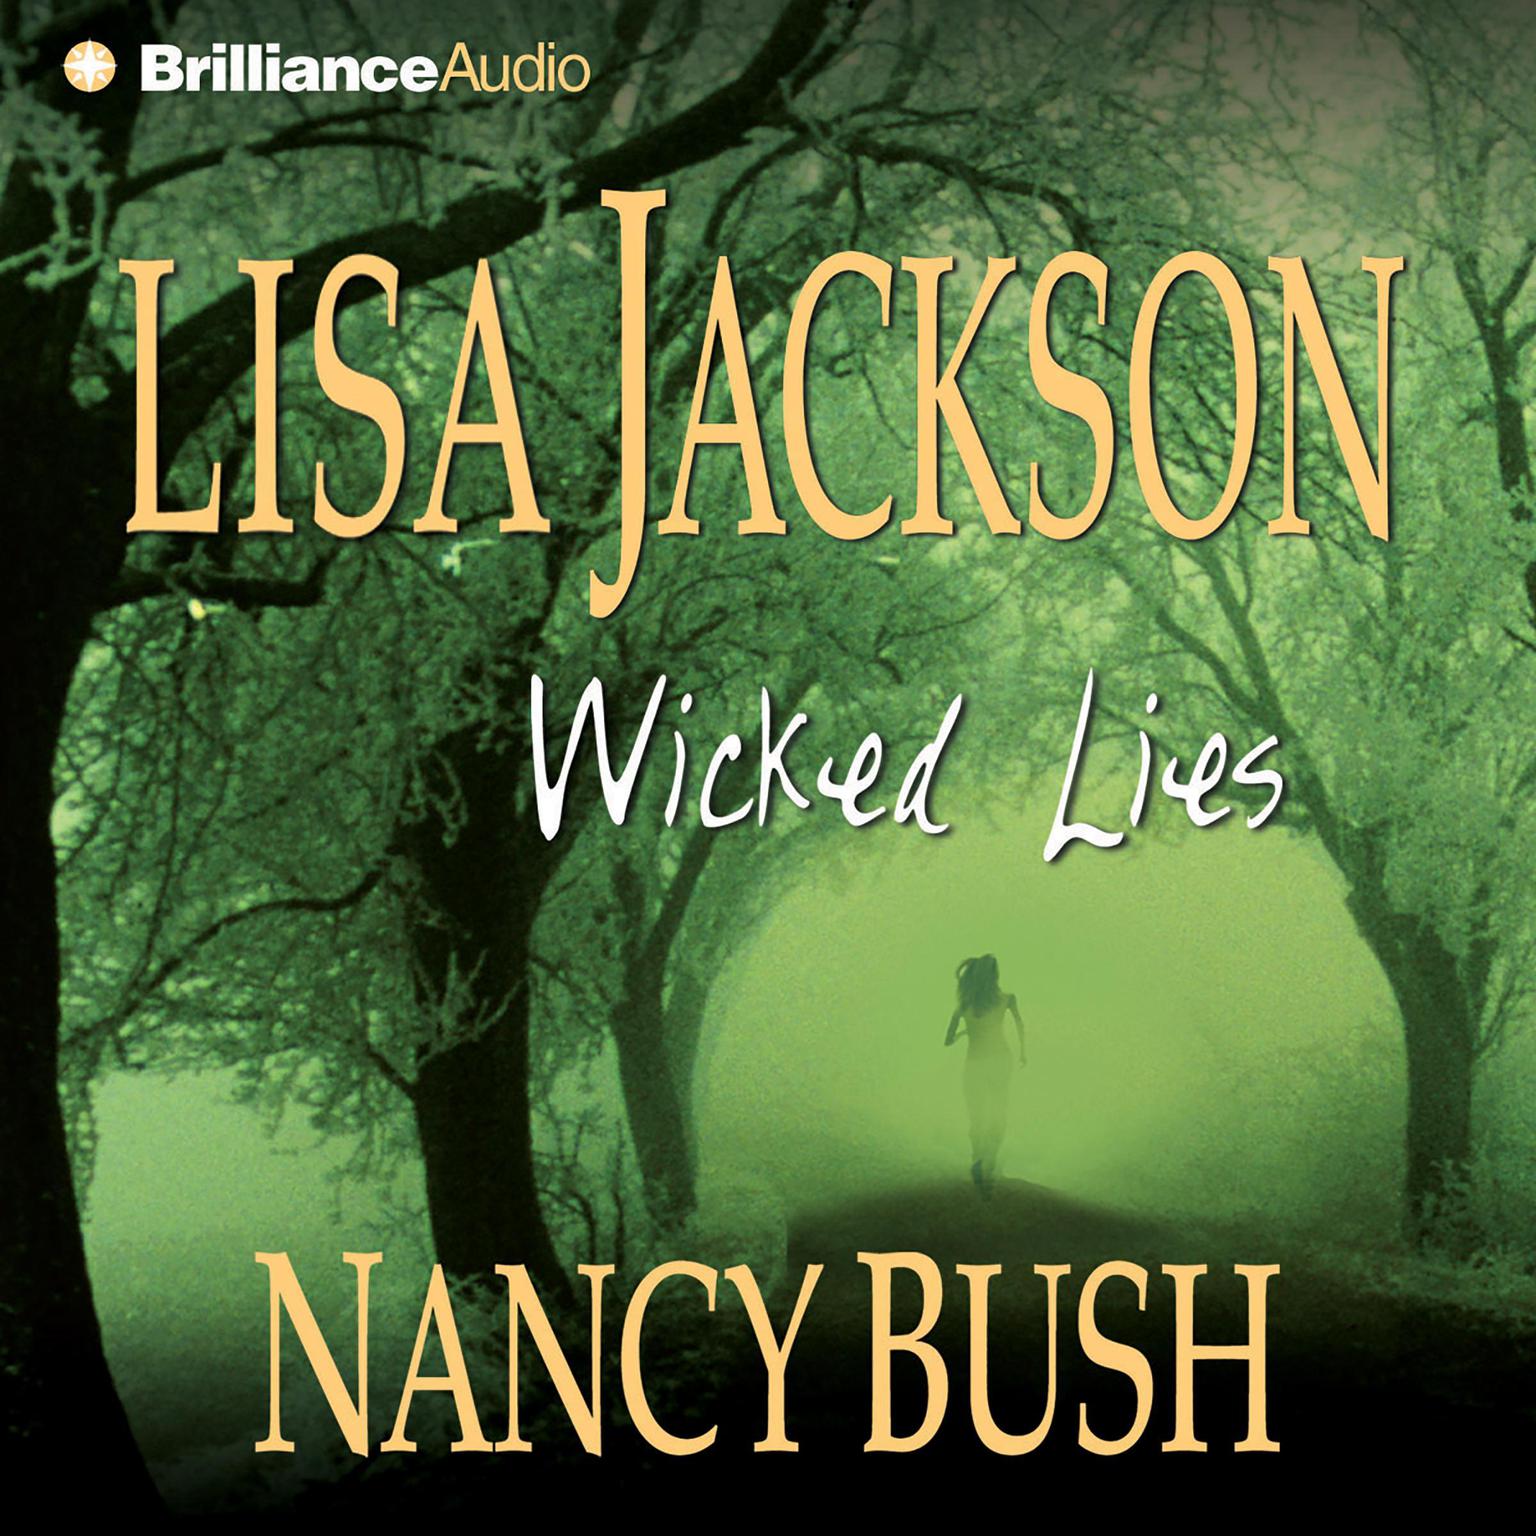 Wicked Lies (Abridged) Audiobook, by Lisa Jackson